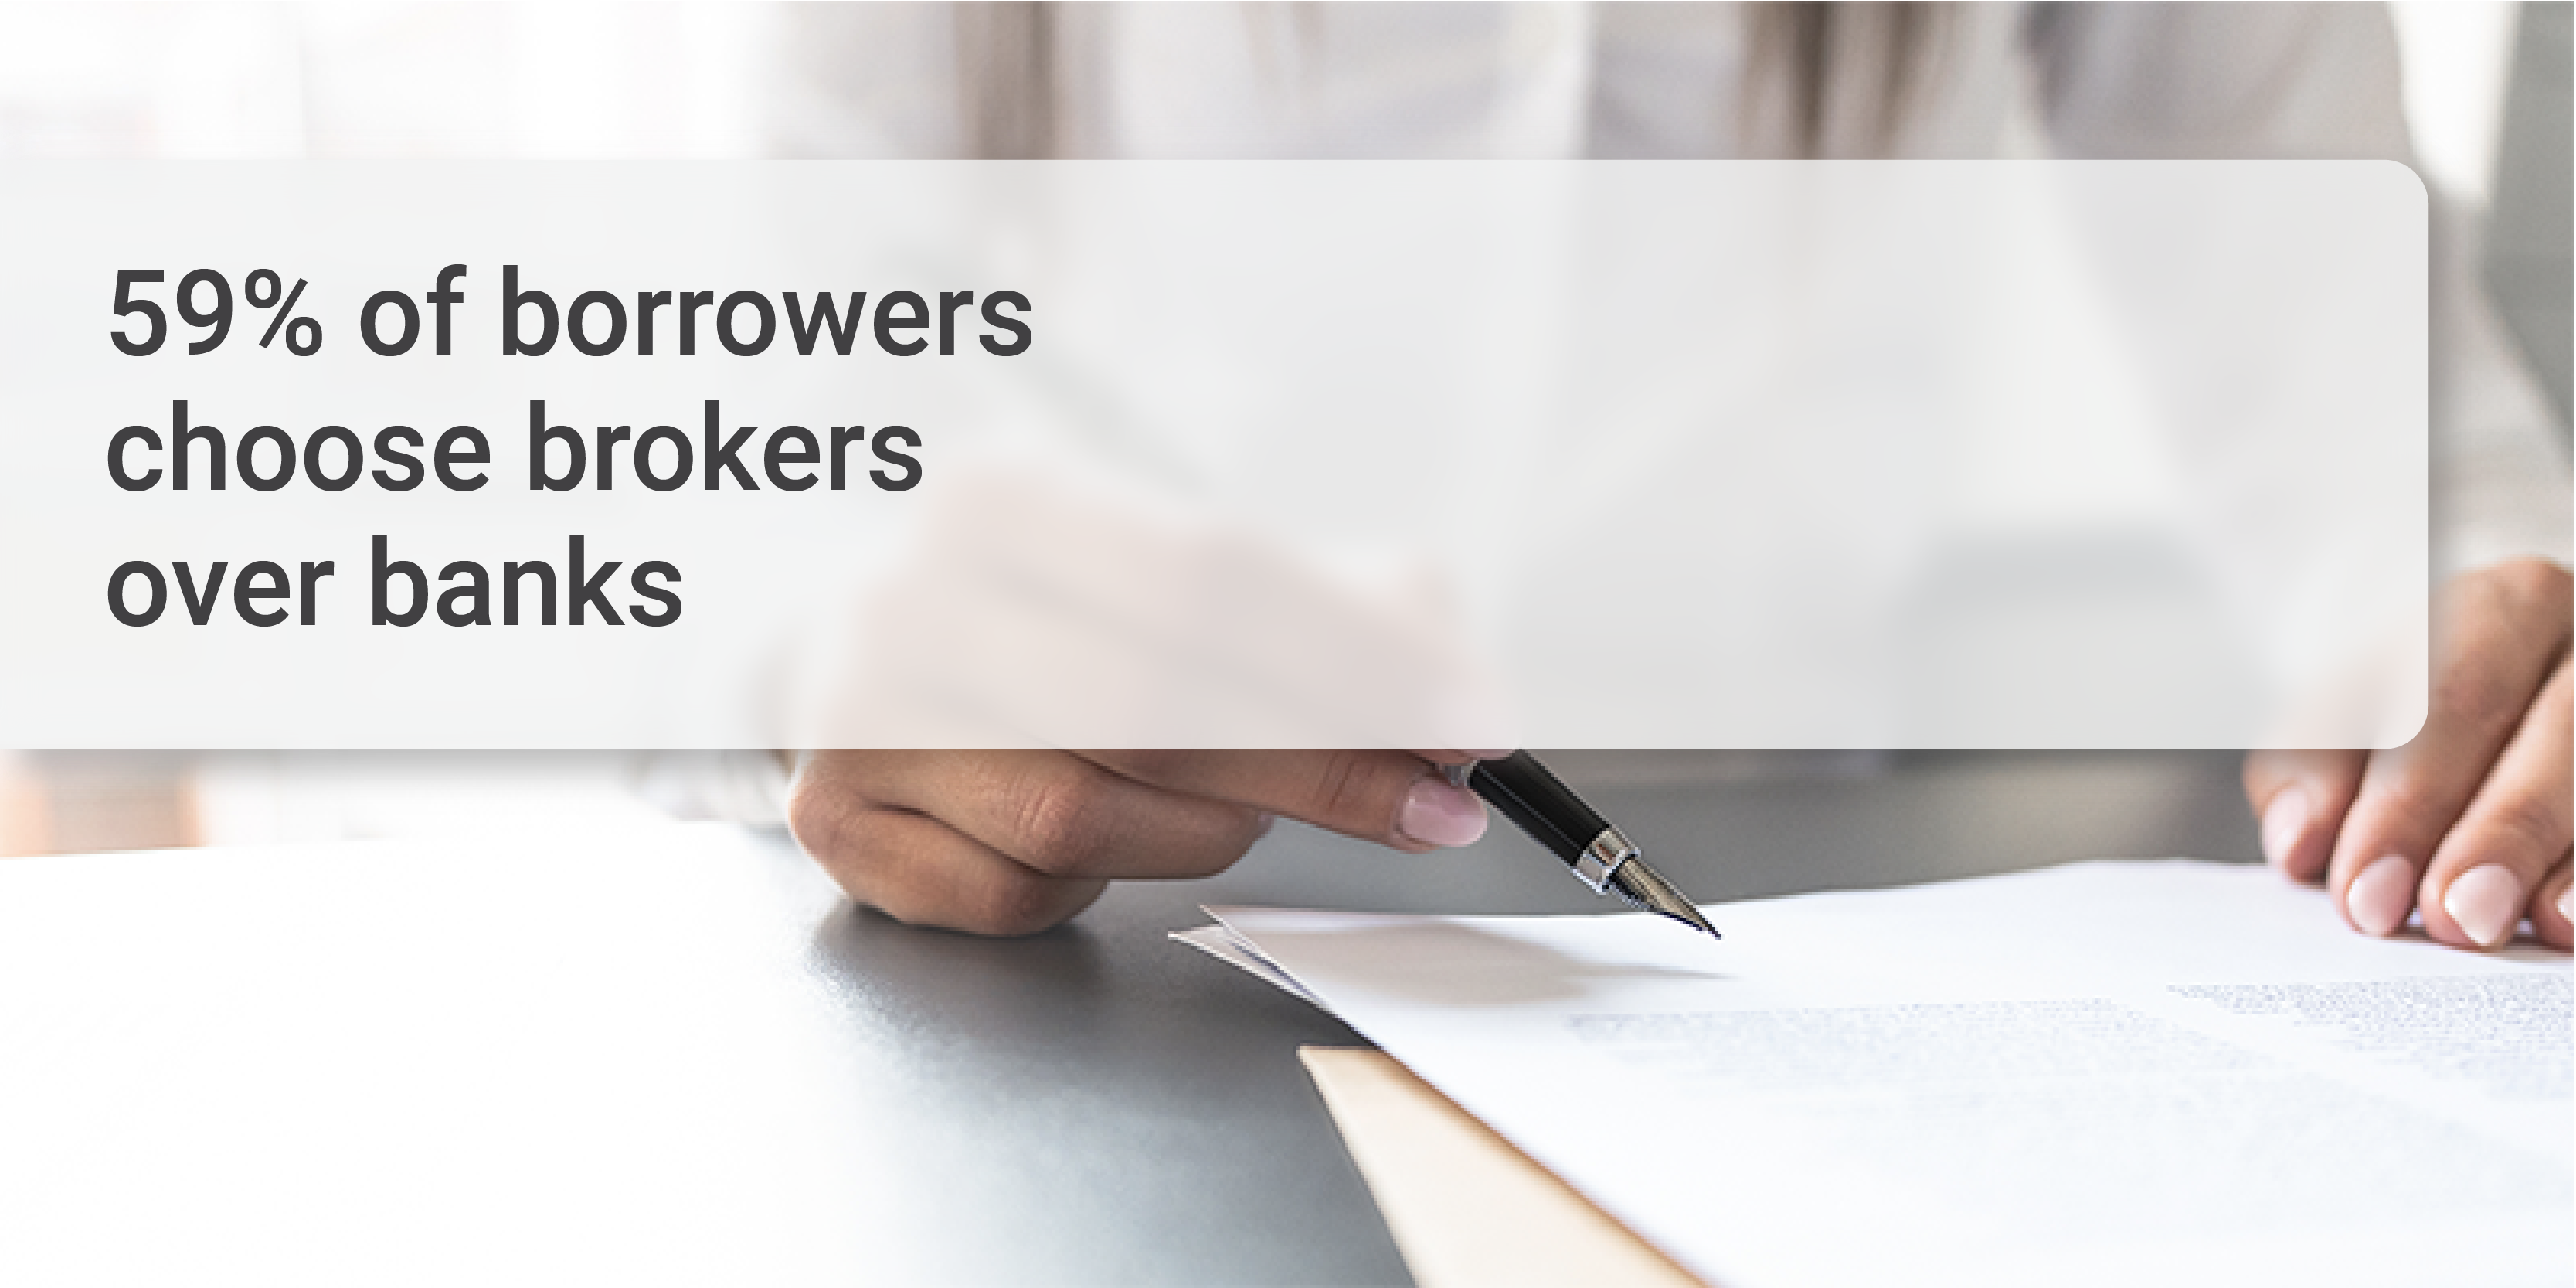 Borrowers choose brokers over banks